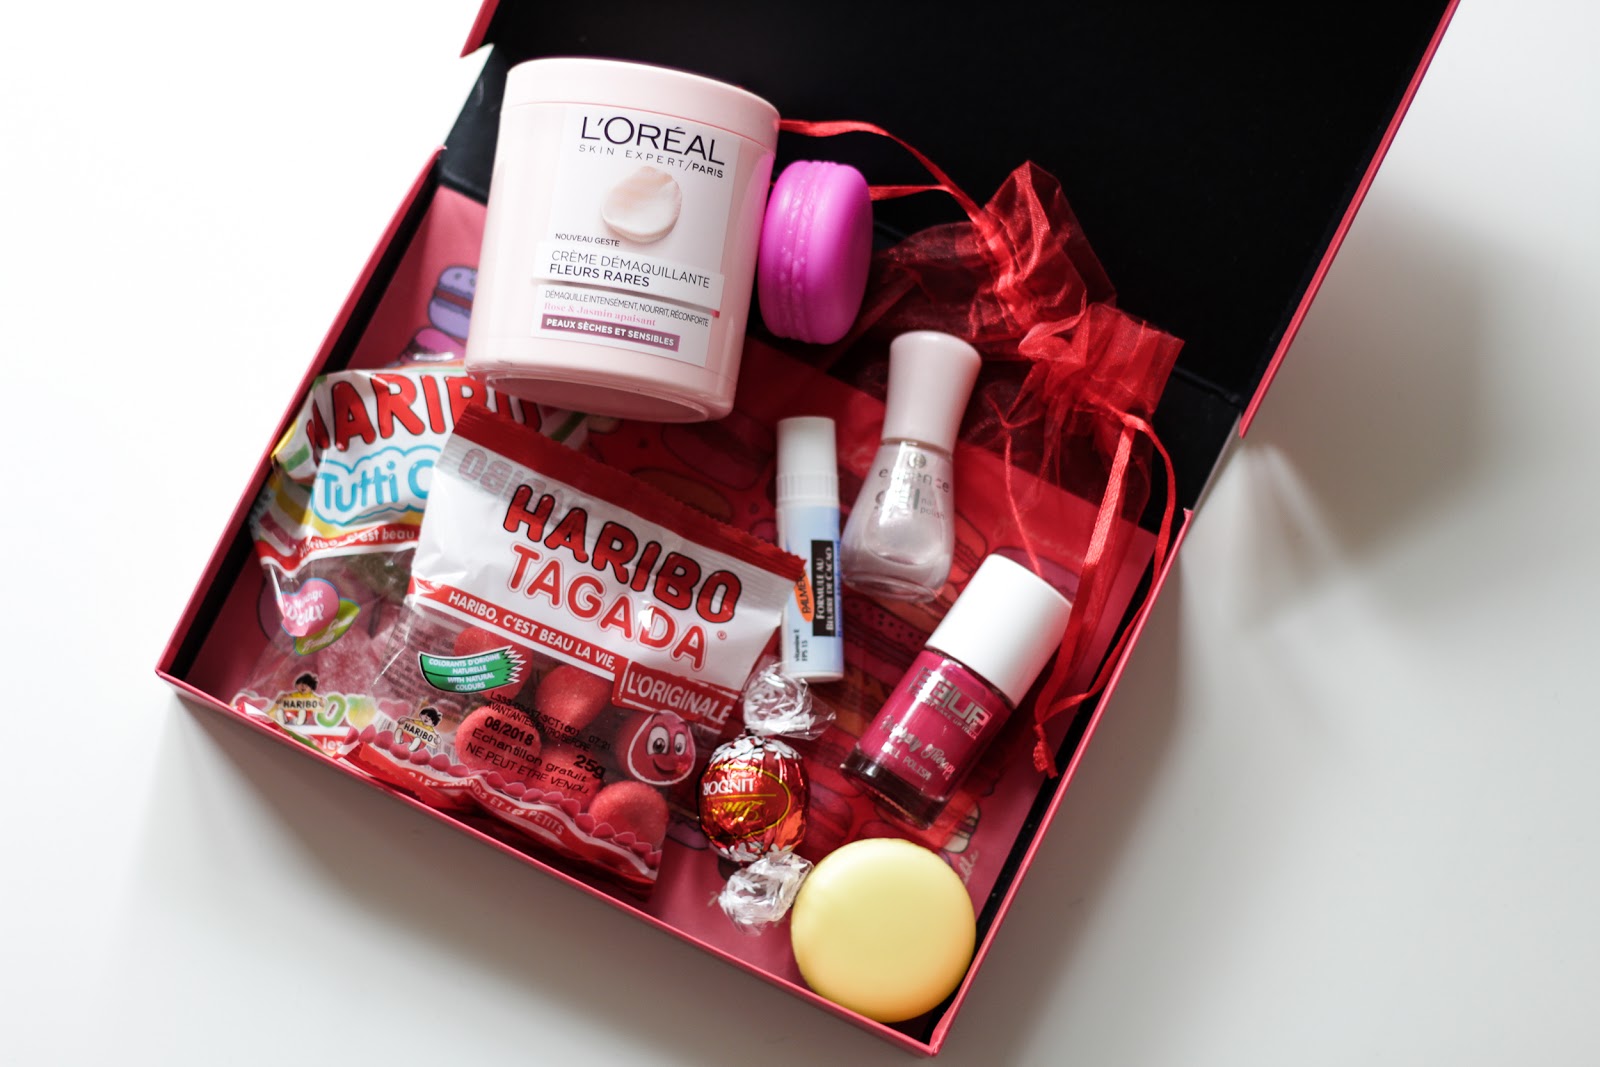 Beautiful Box Macarons: scopriamo i nuovi prodotti make-up!